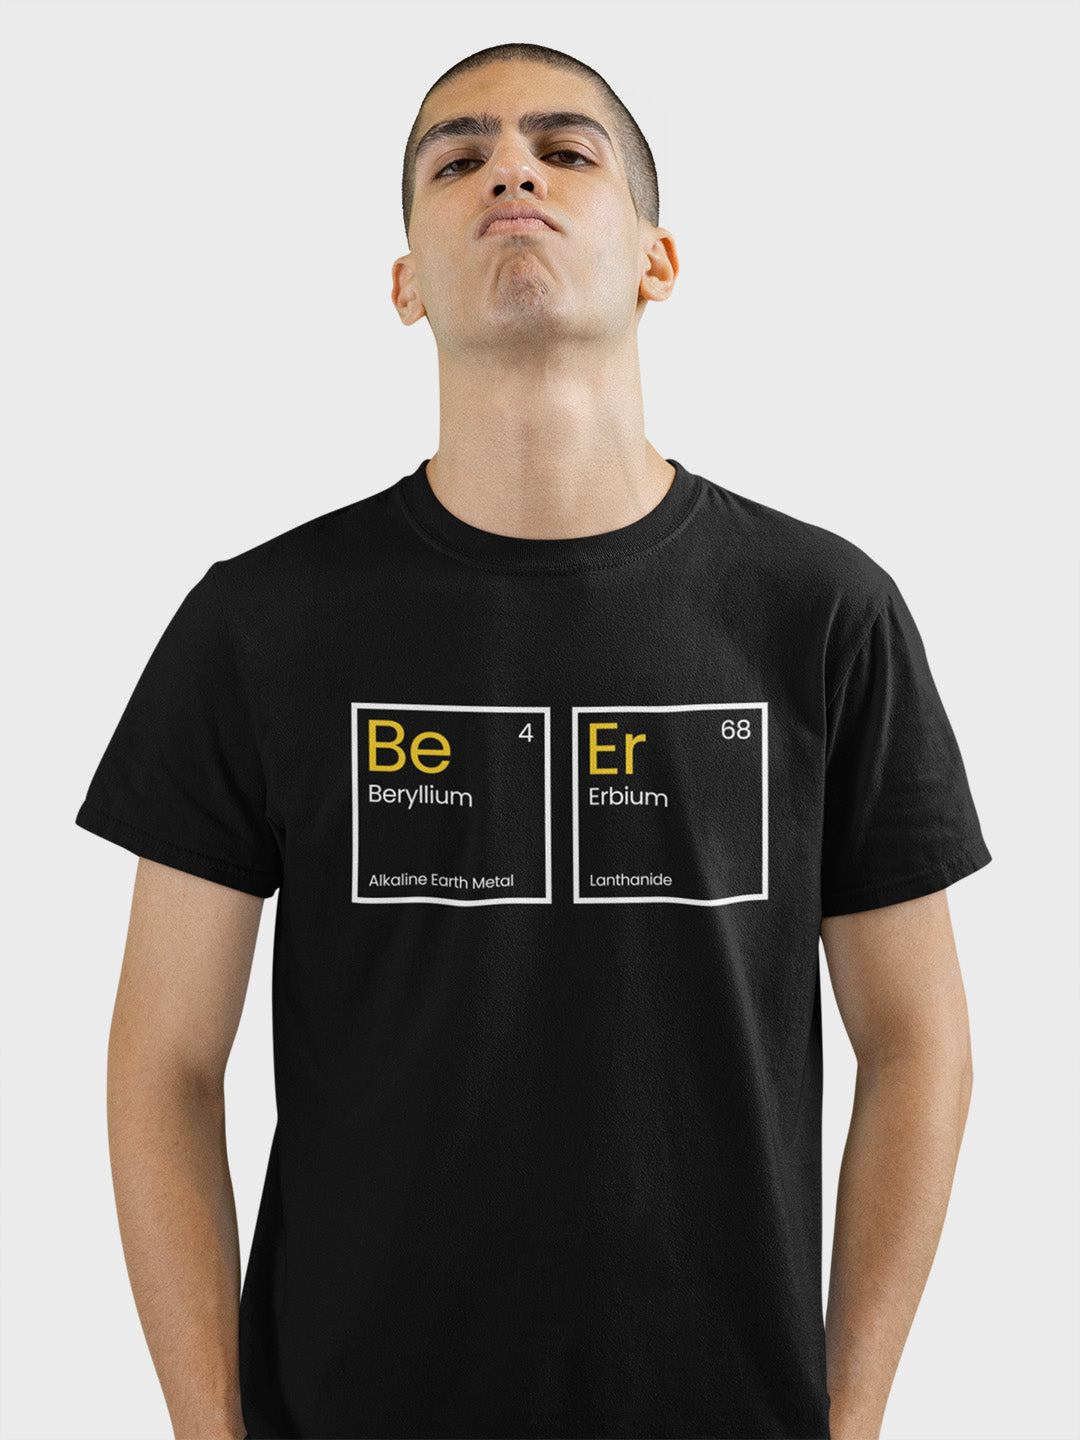 Chemestry Design Beer T-Shirt